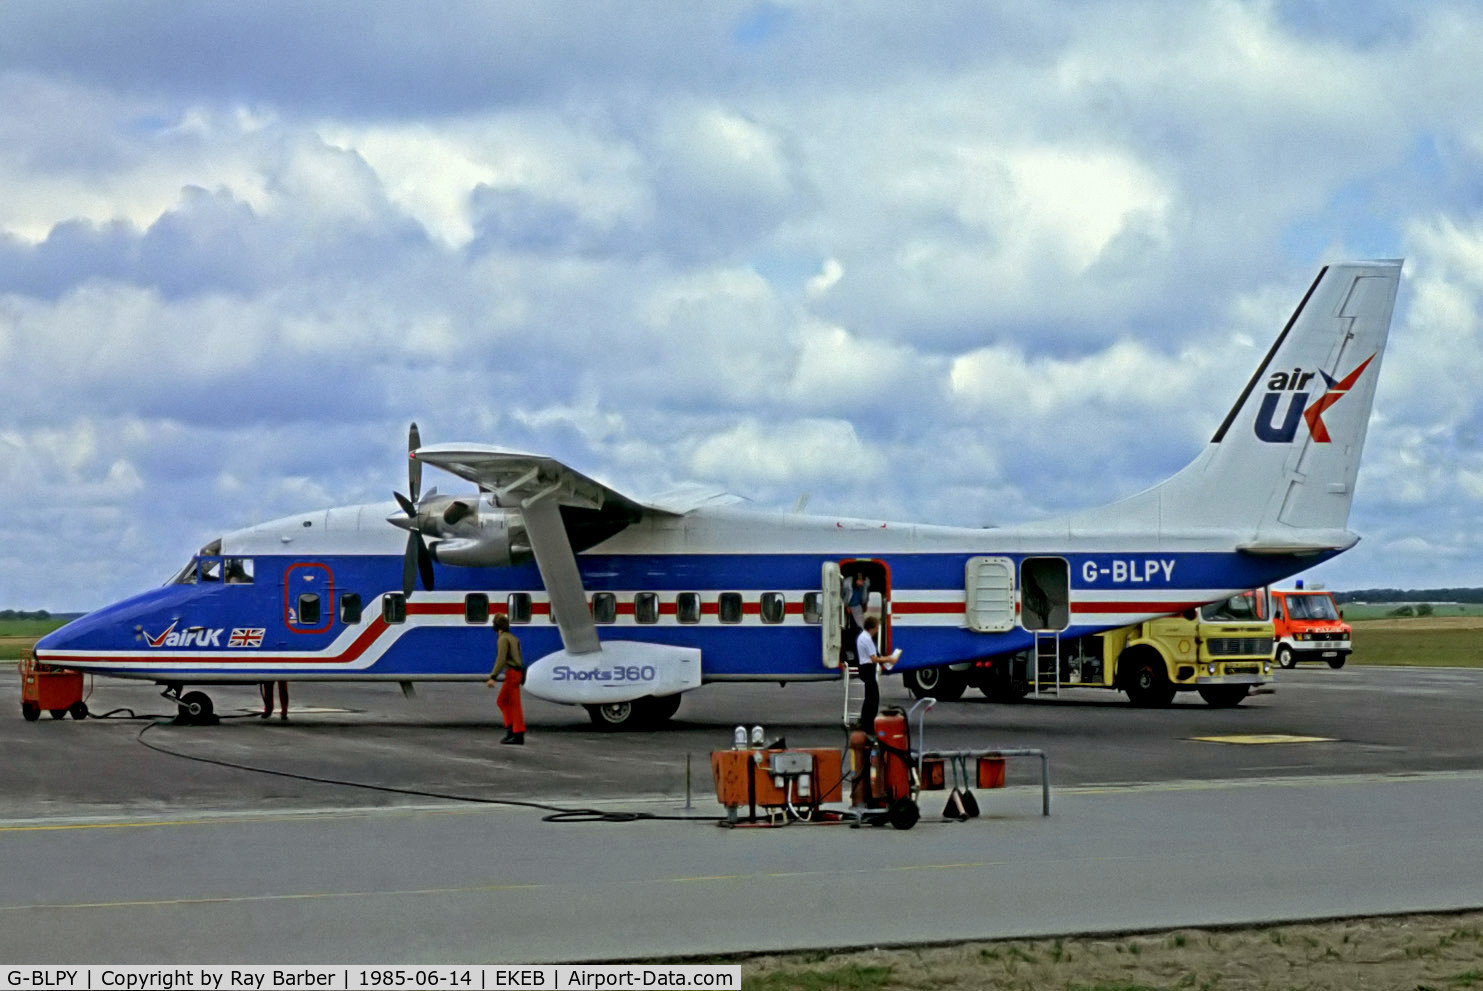 G-BLPY, 1984 Short 360-100 C/N SH.3660, Shorts SD-360-300 [SH3413] (Air UK) Esbjerg~OY 14/06/1985. From a slide.